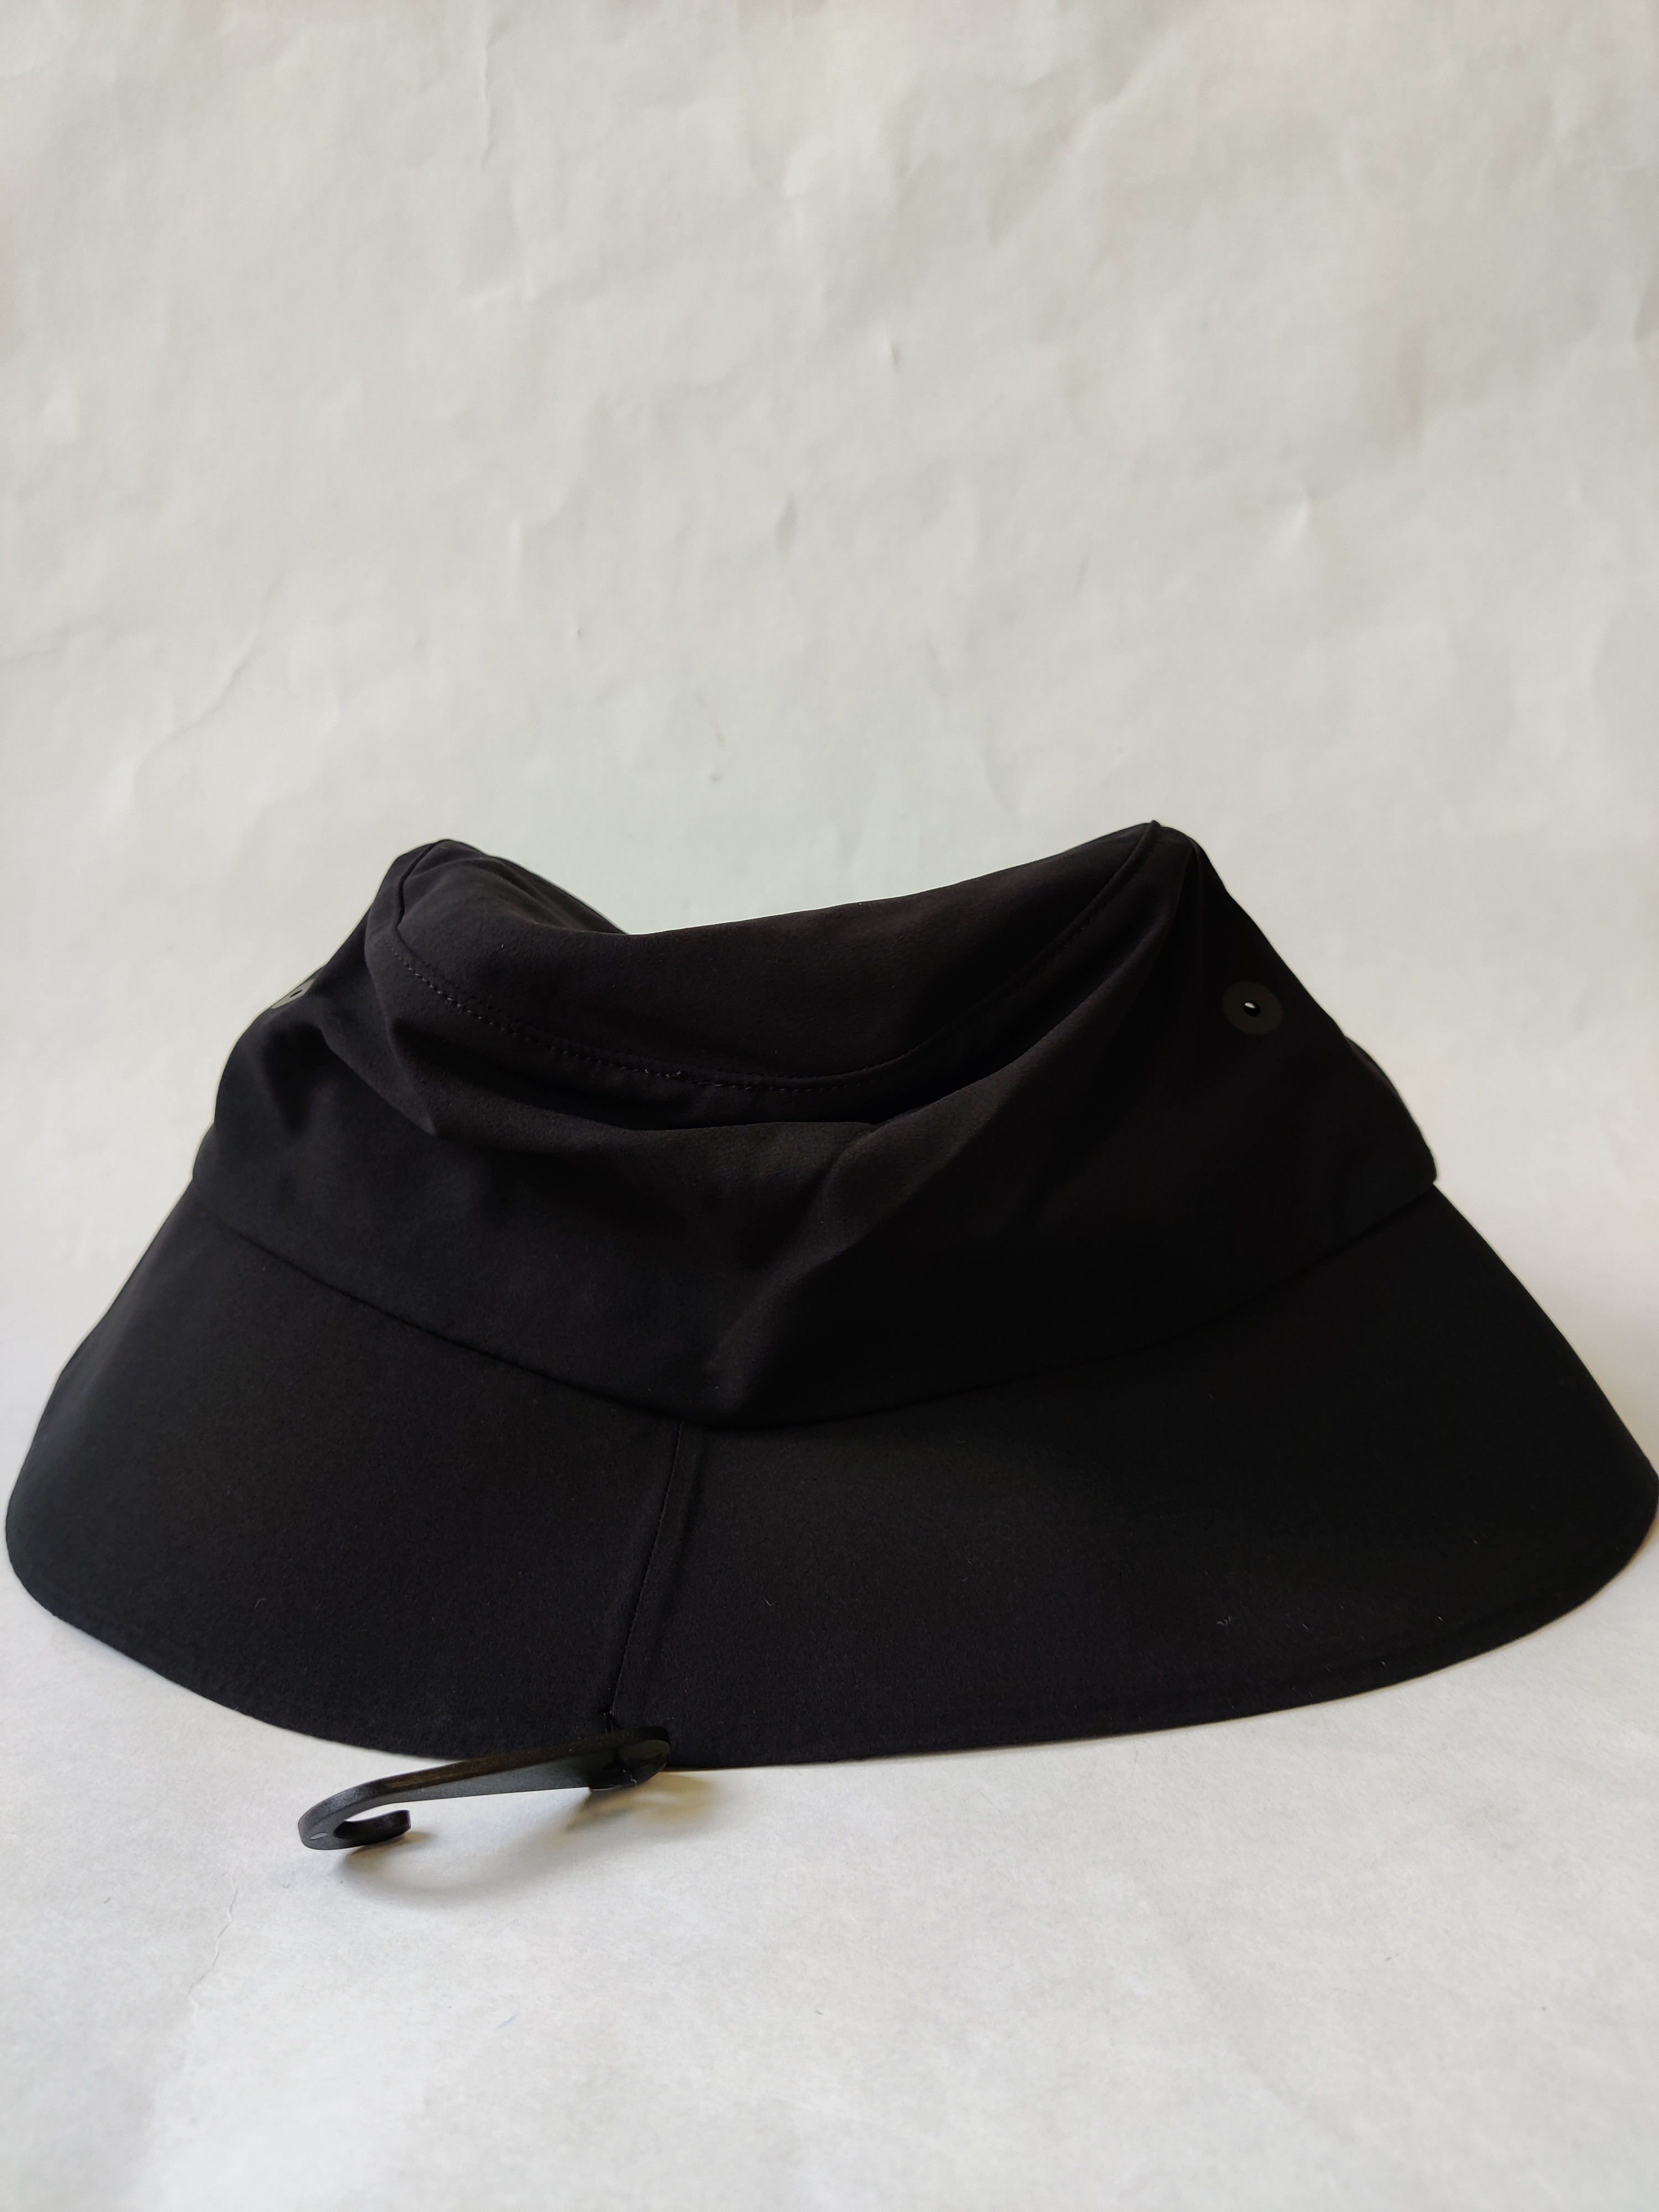 Sinsolo Bucket Hat Size L/XL Sun Cap Summer Black Travel Beach Outdoor Men  UPF 50+